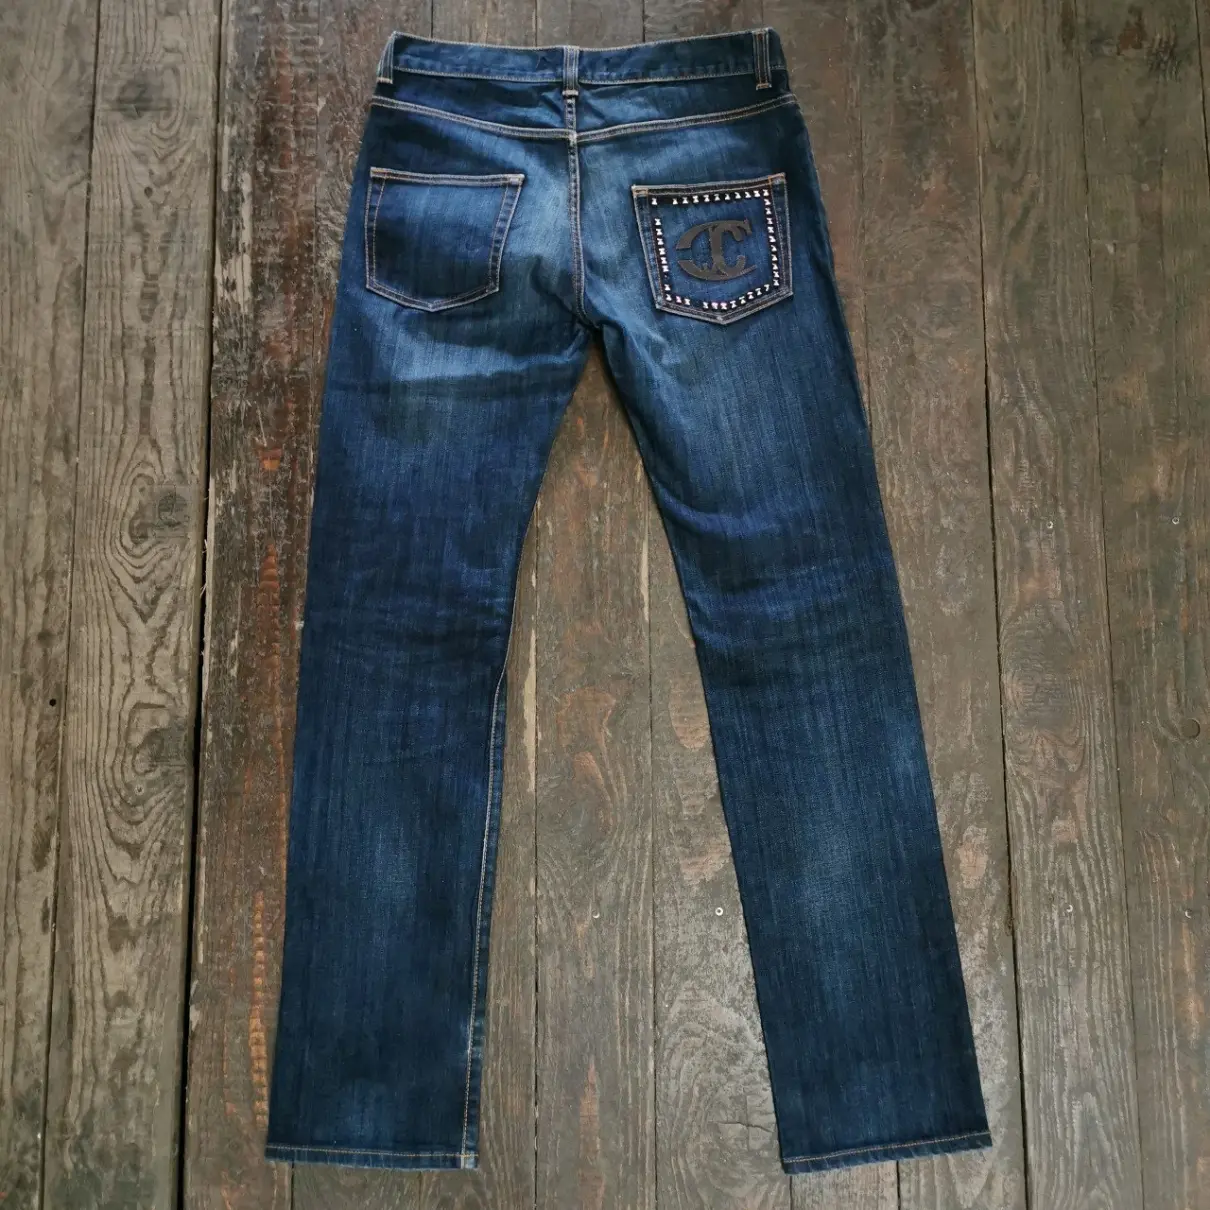 Buy Just Cavalli Straight jeans online